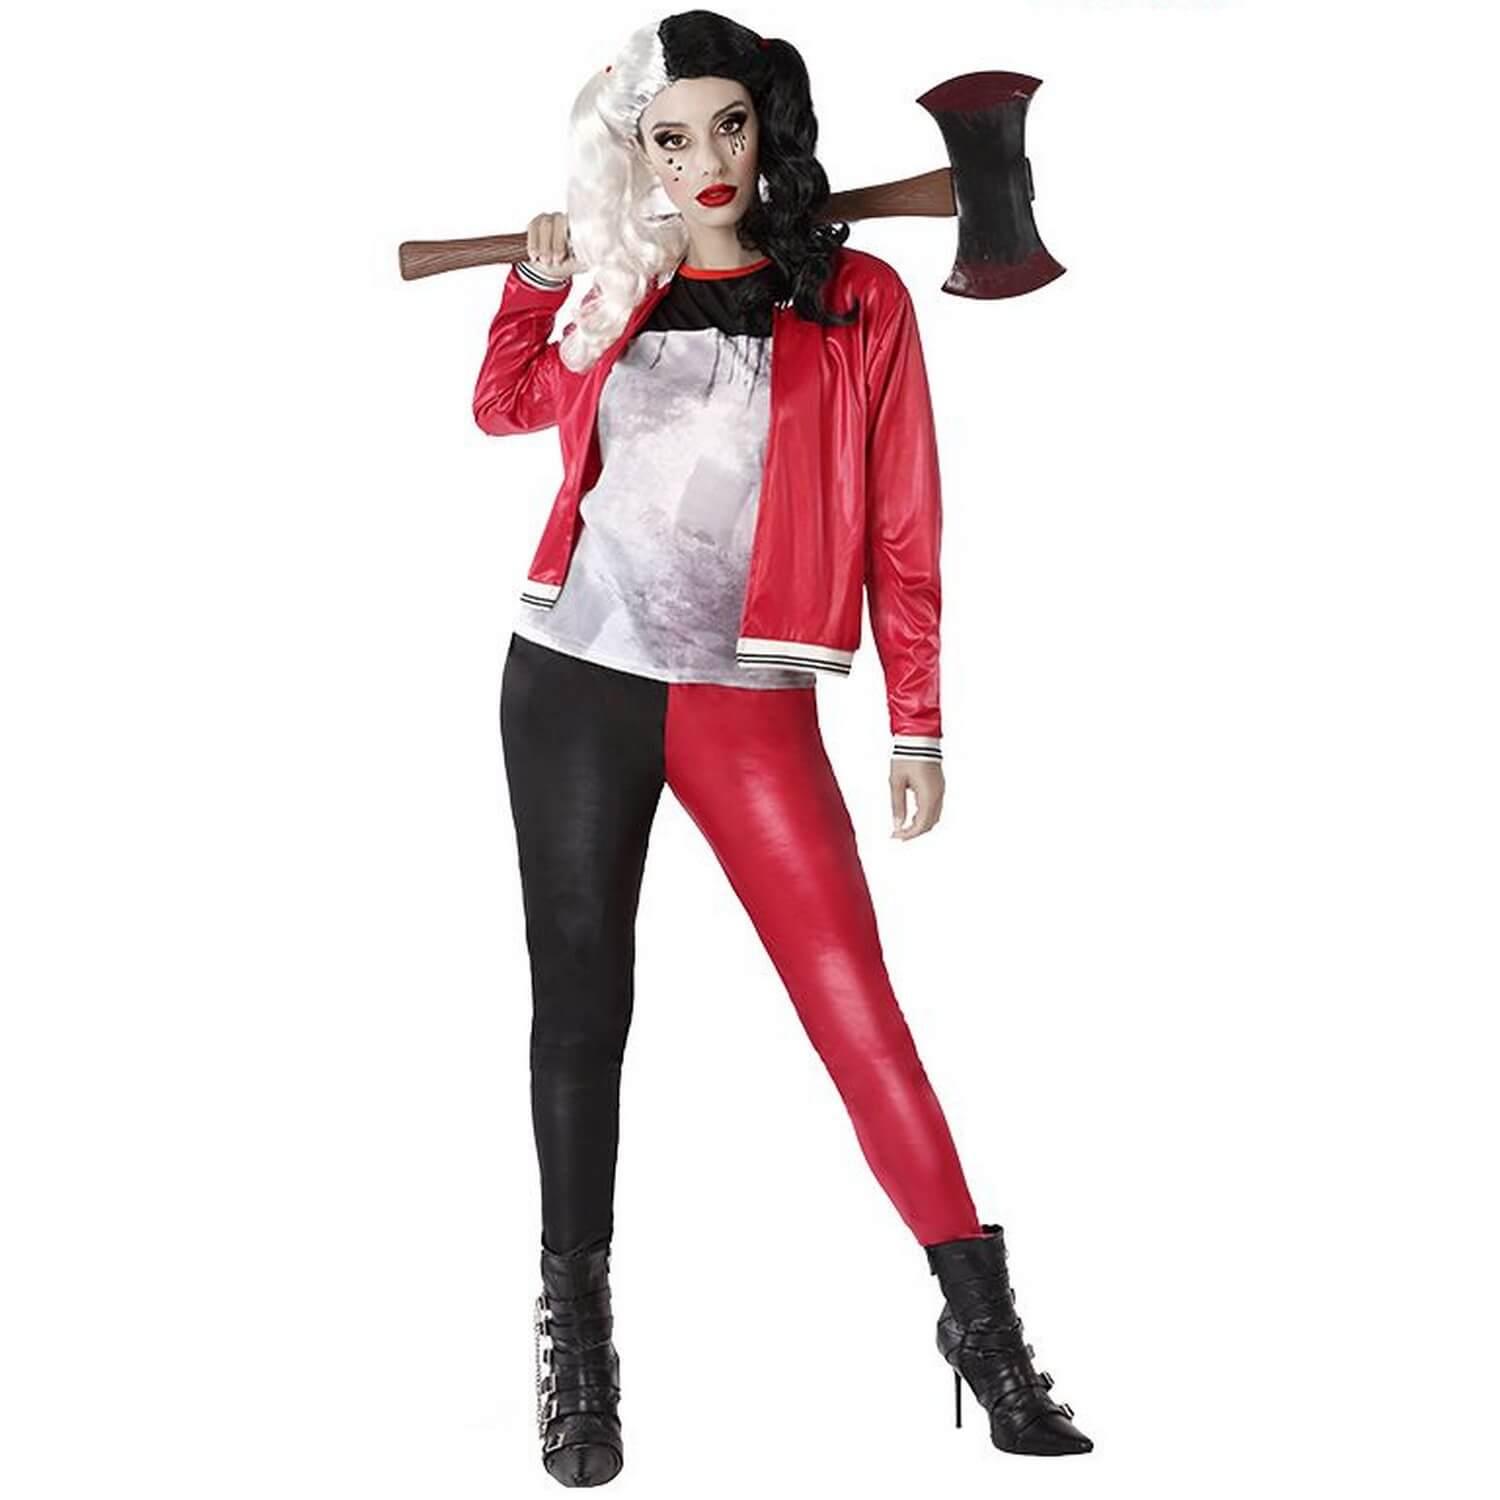 Deguisement Ladybug fille fantaisie Halloween noel Cosplay costume